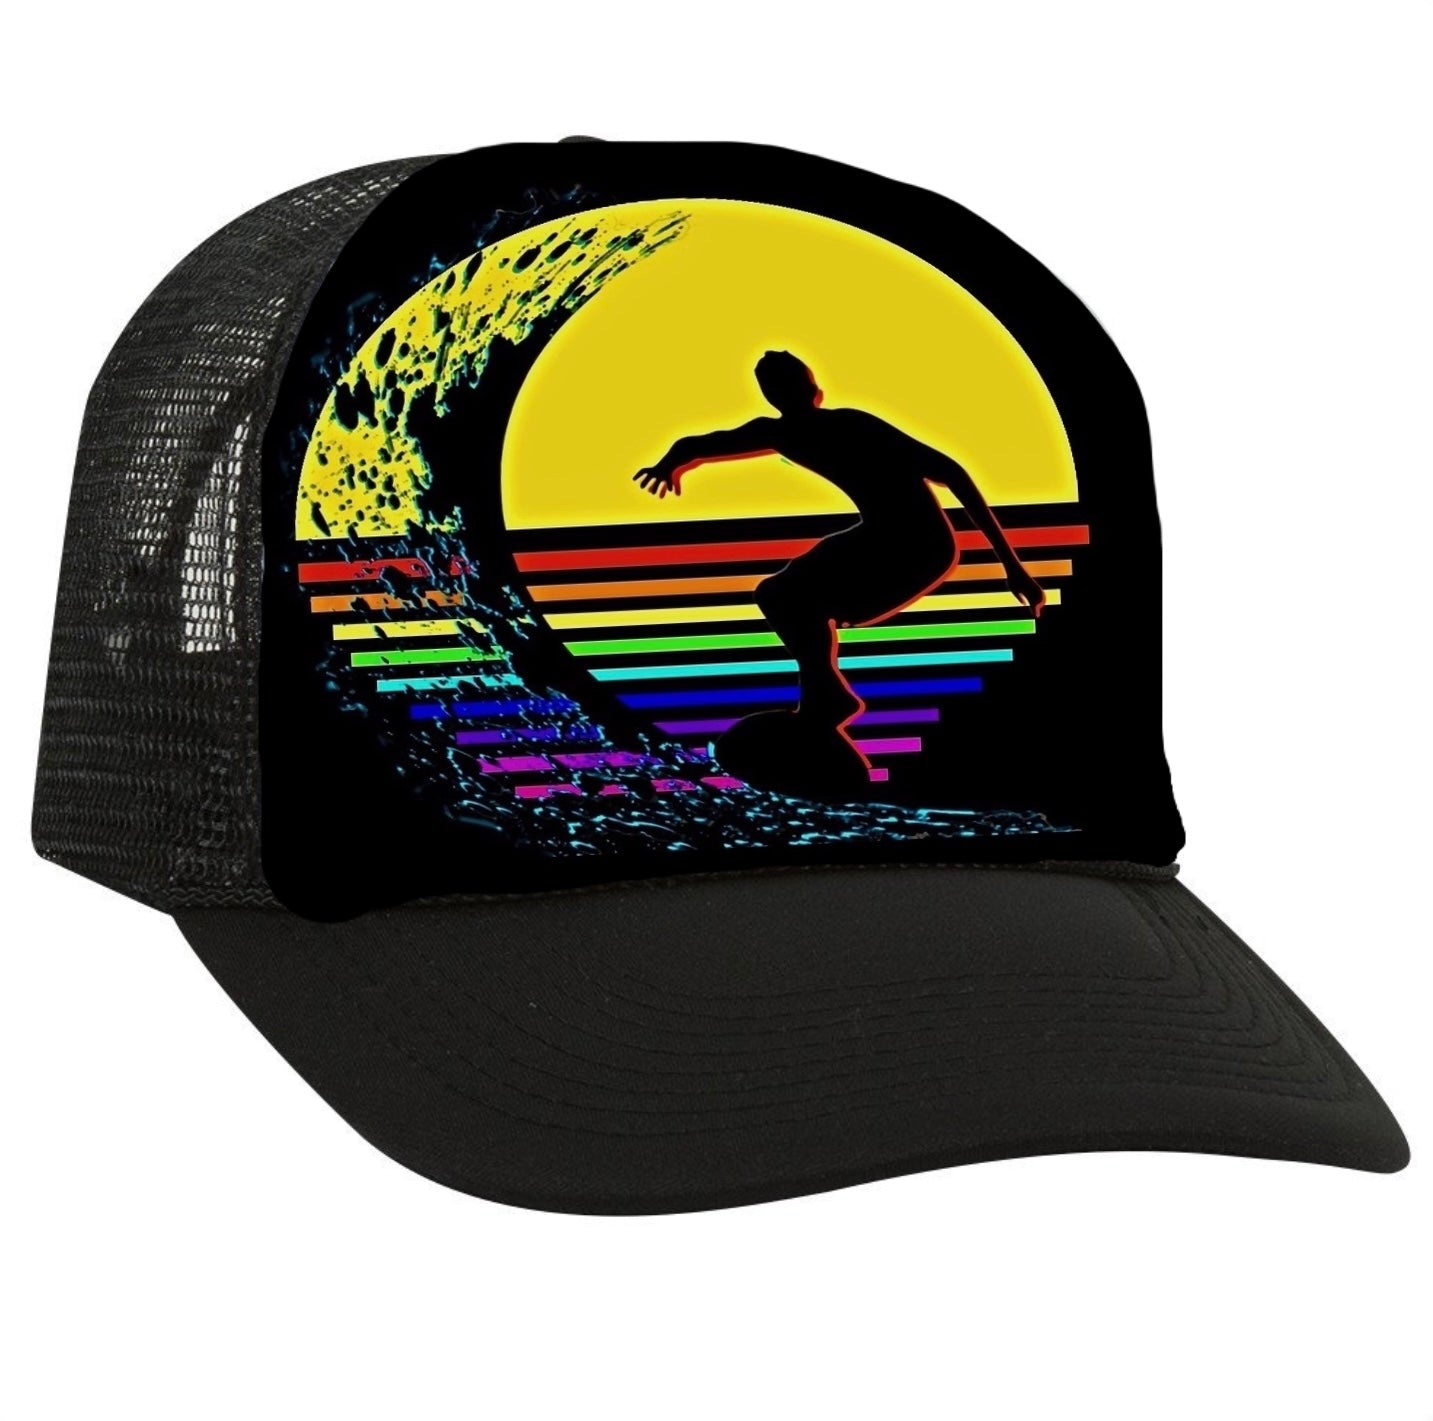 Surfer Mesh trucker hat all original Artwork